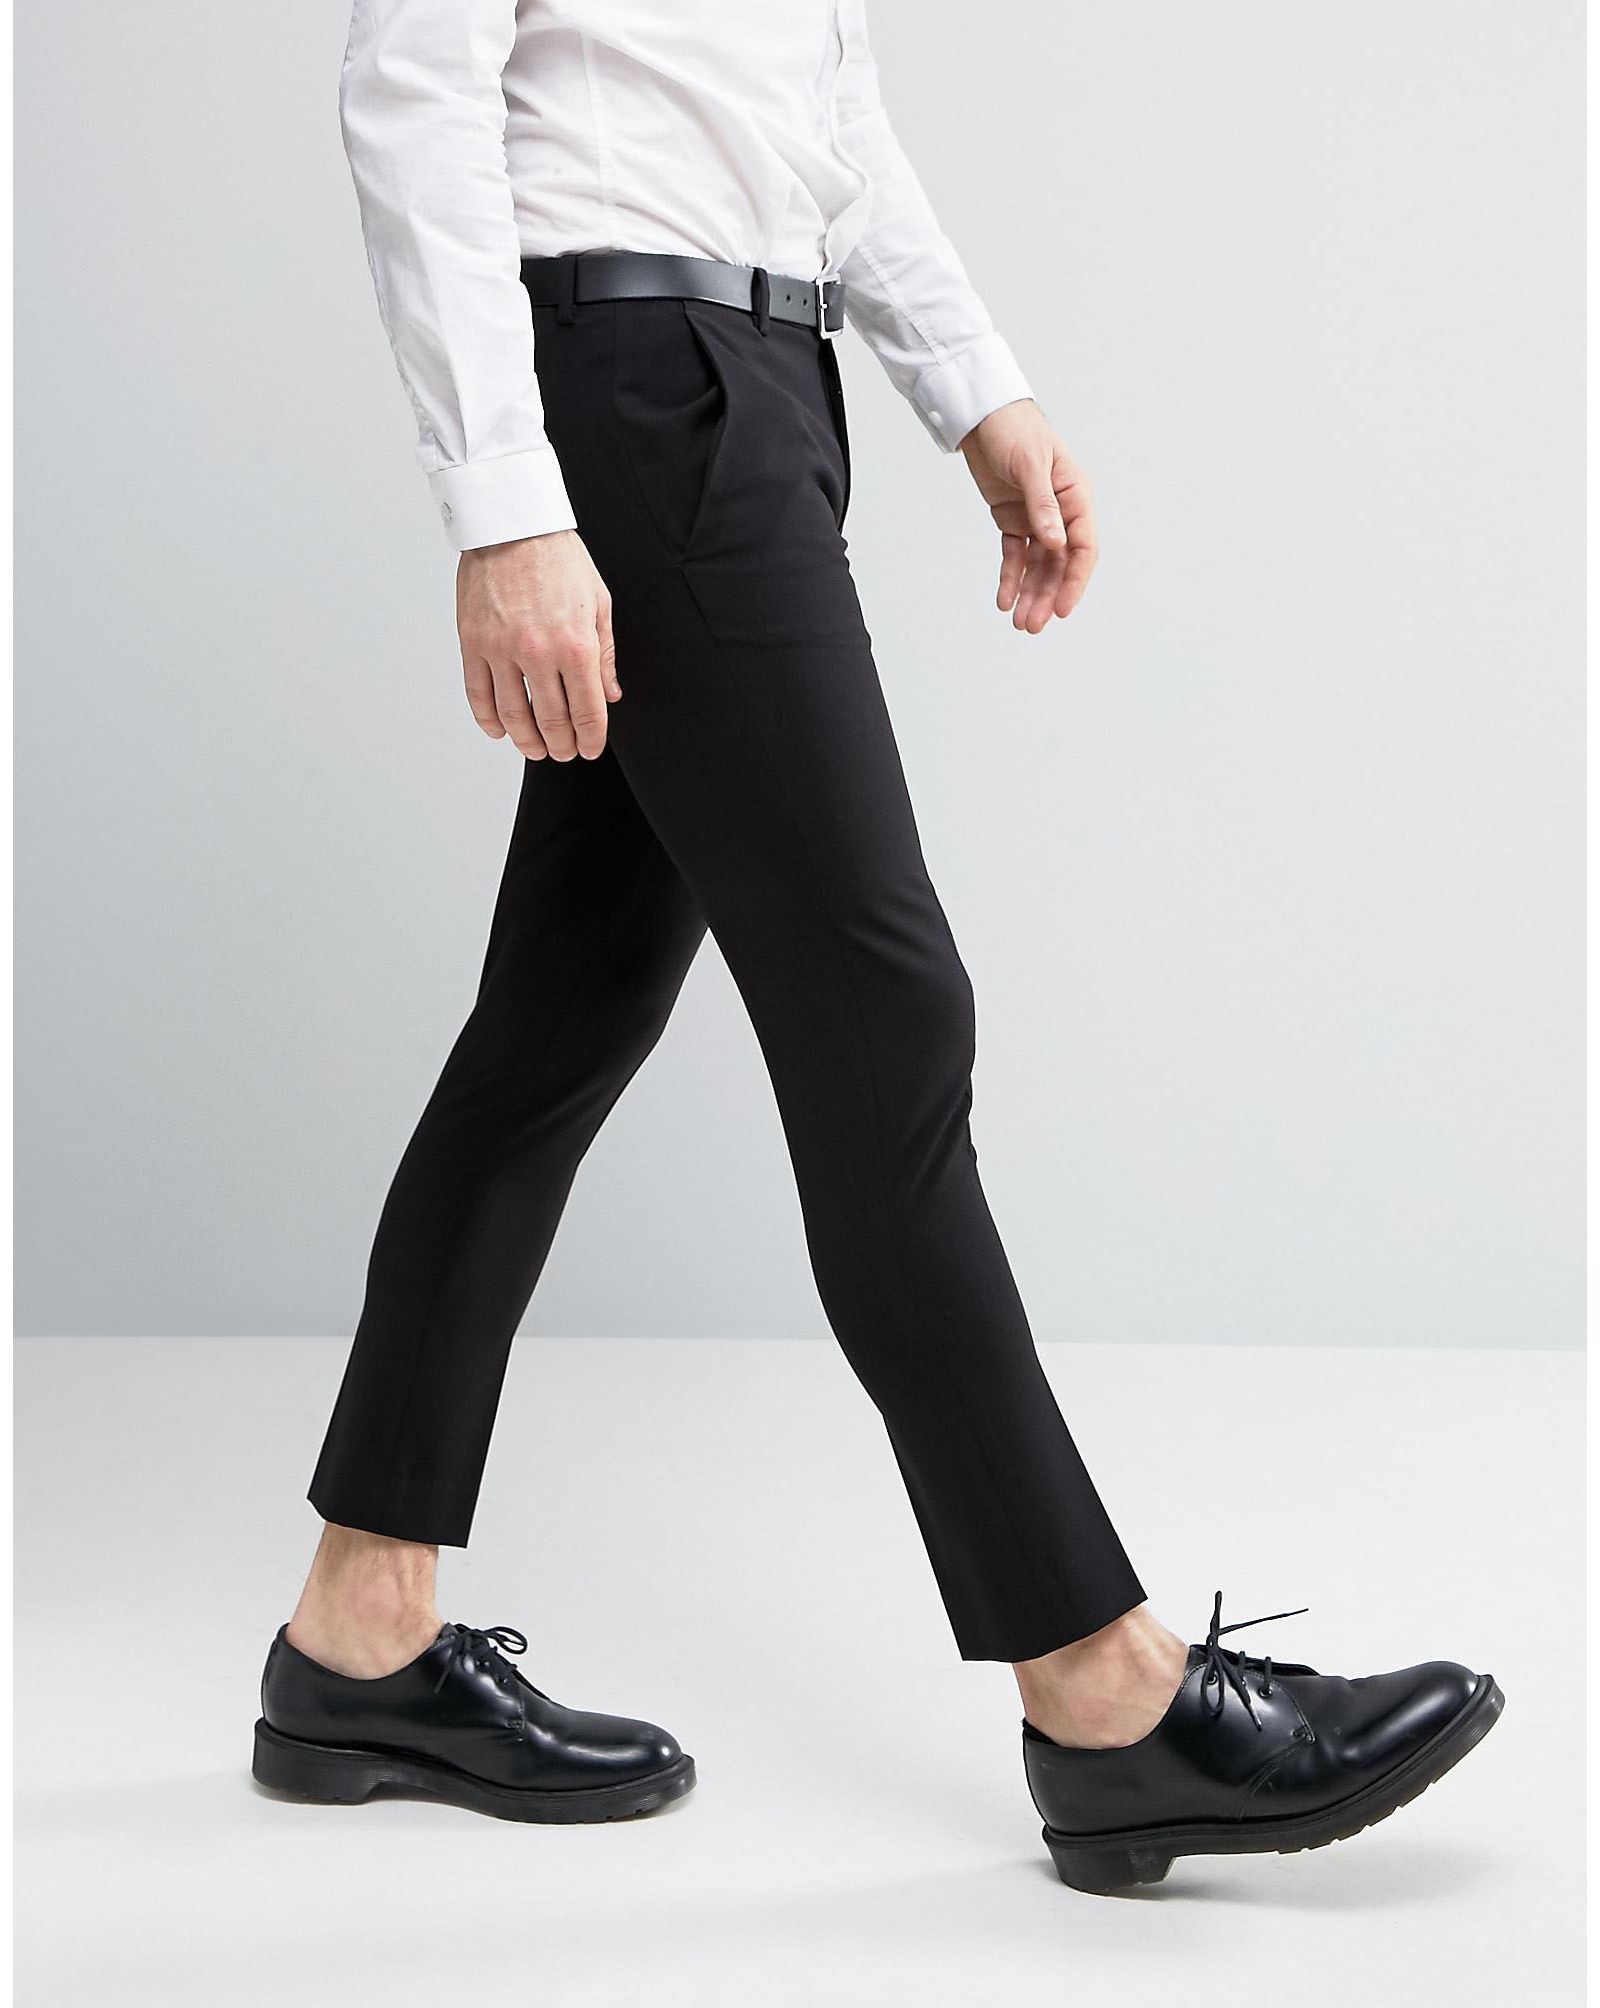 ASOS Extreme Super Skinny Cropped Smart Pants in Black